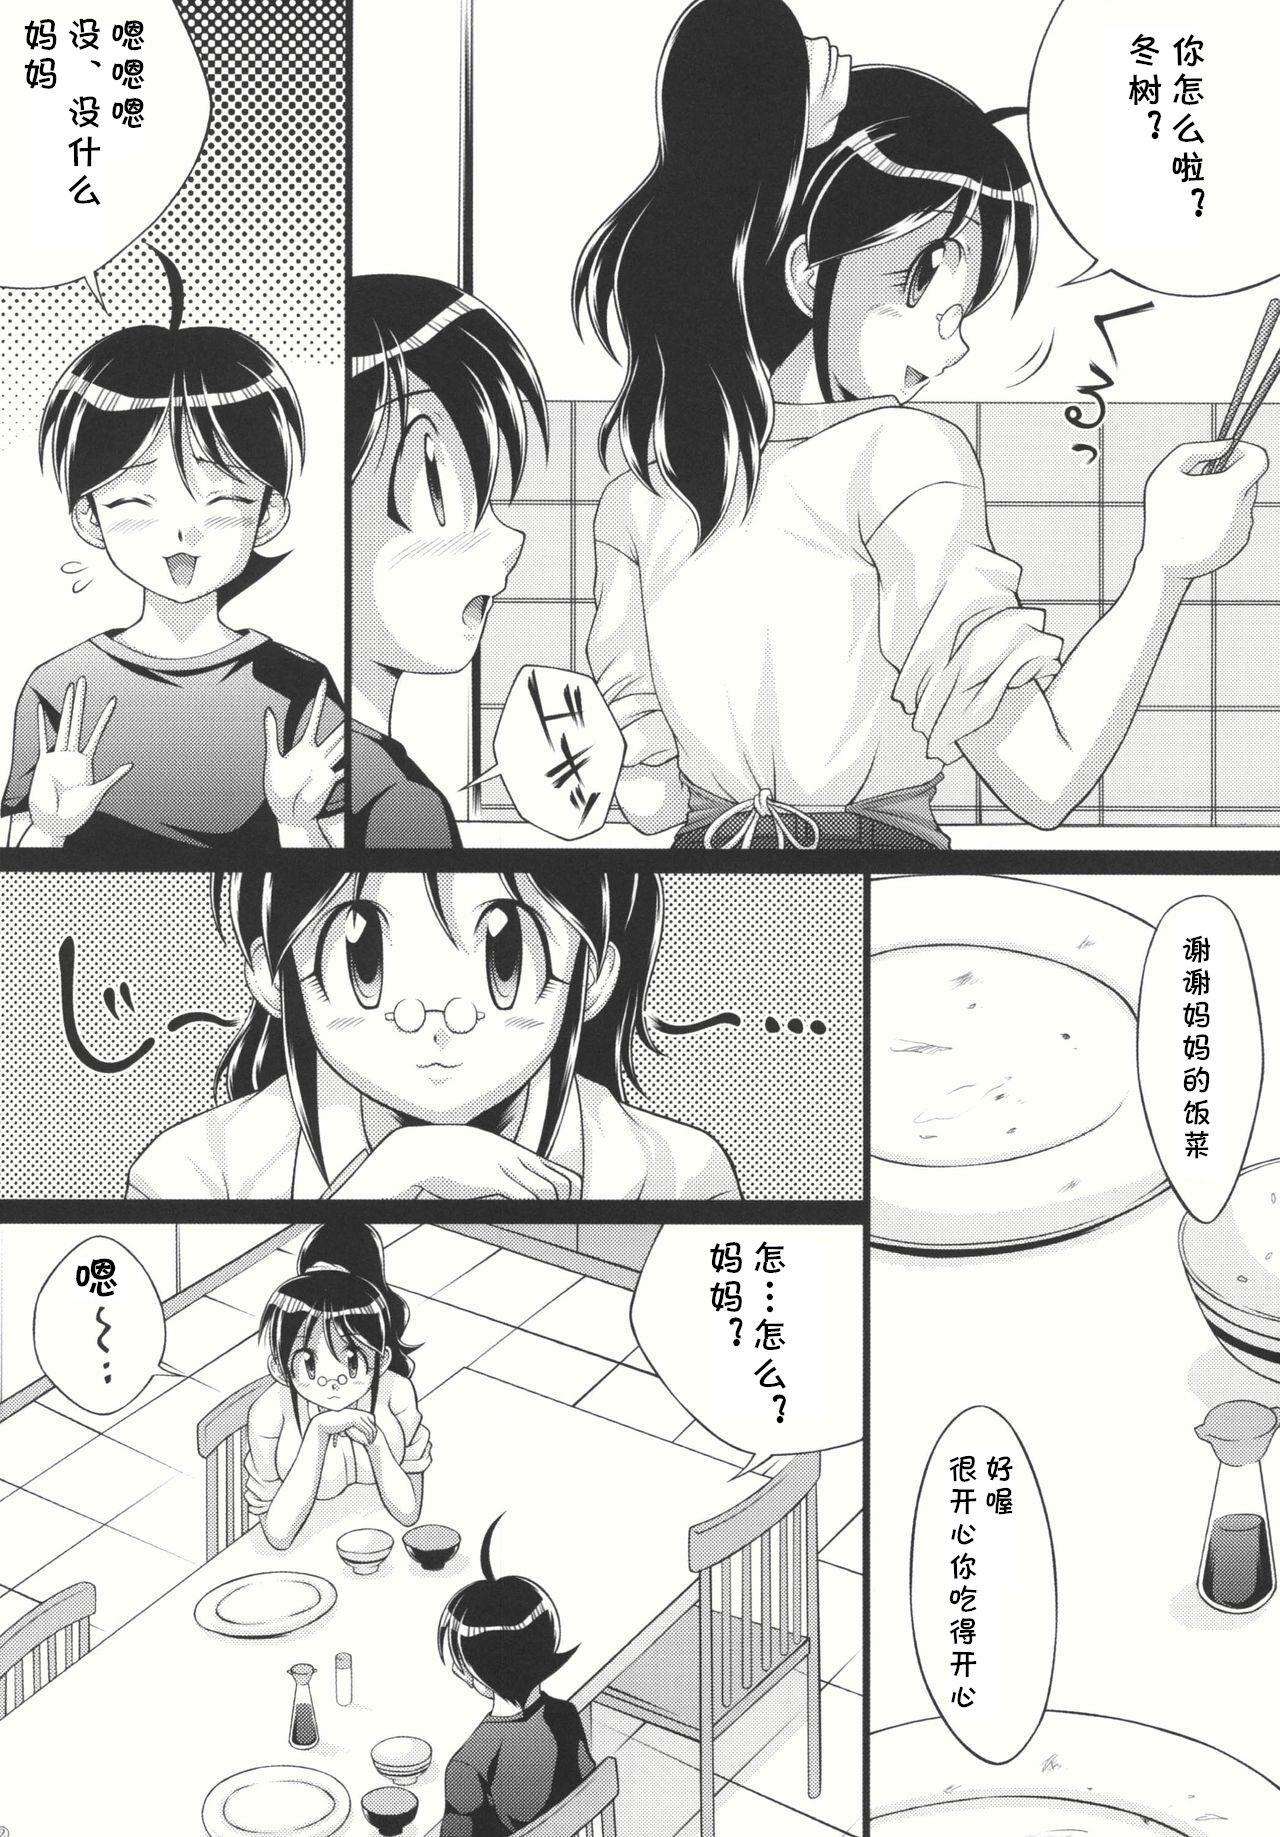 Little Chikyuujin Maruhi Seitai Chousa Houkokusho 4 - Keroro gunsou | sgt. frog Les - Page 4